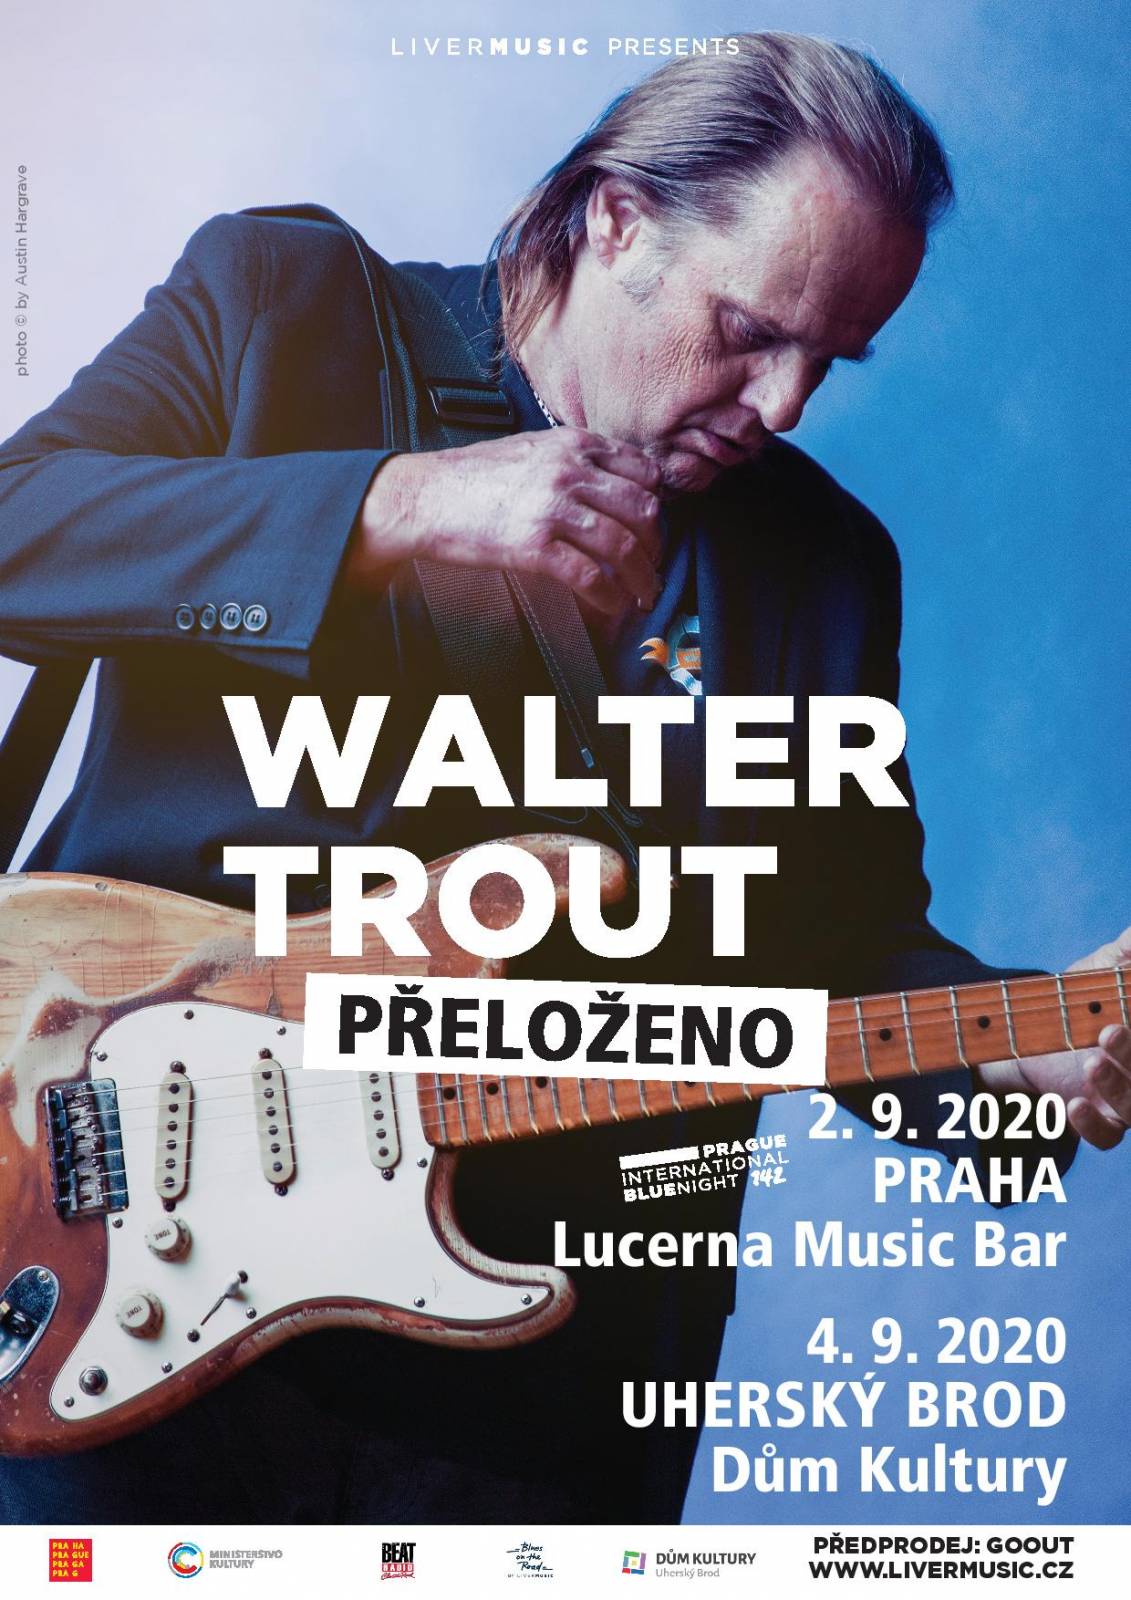 Prague International Bluenight: Walter Trout